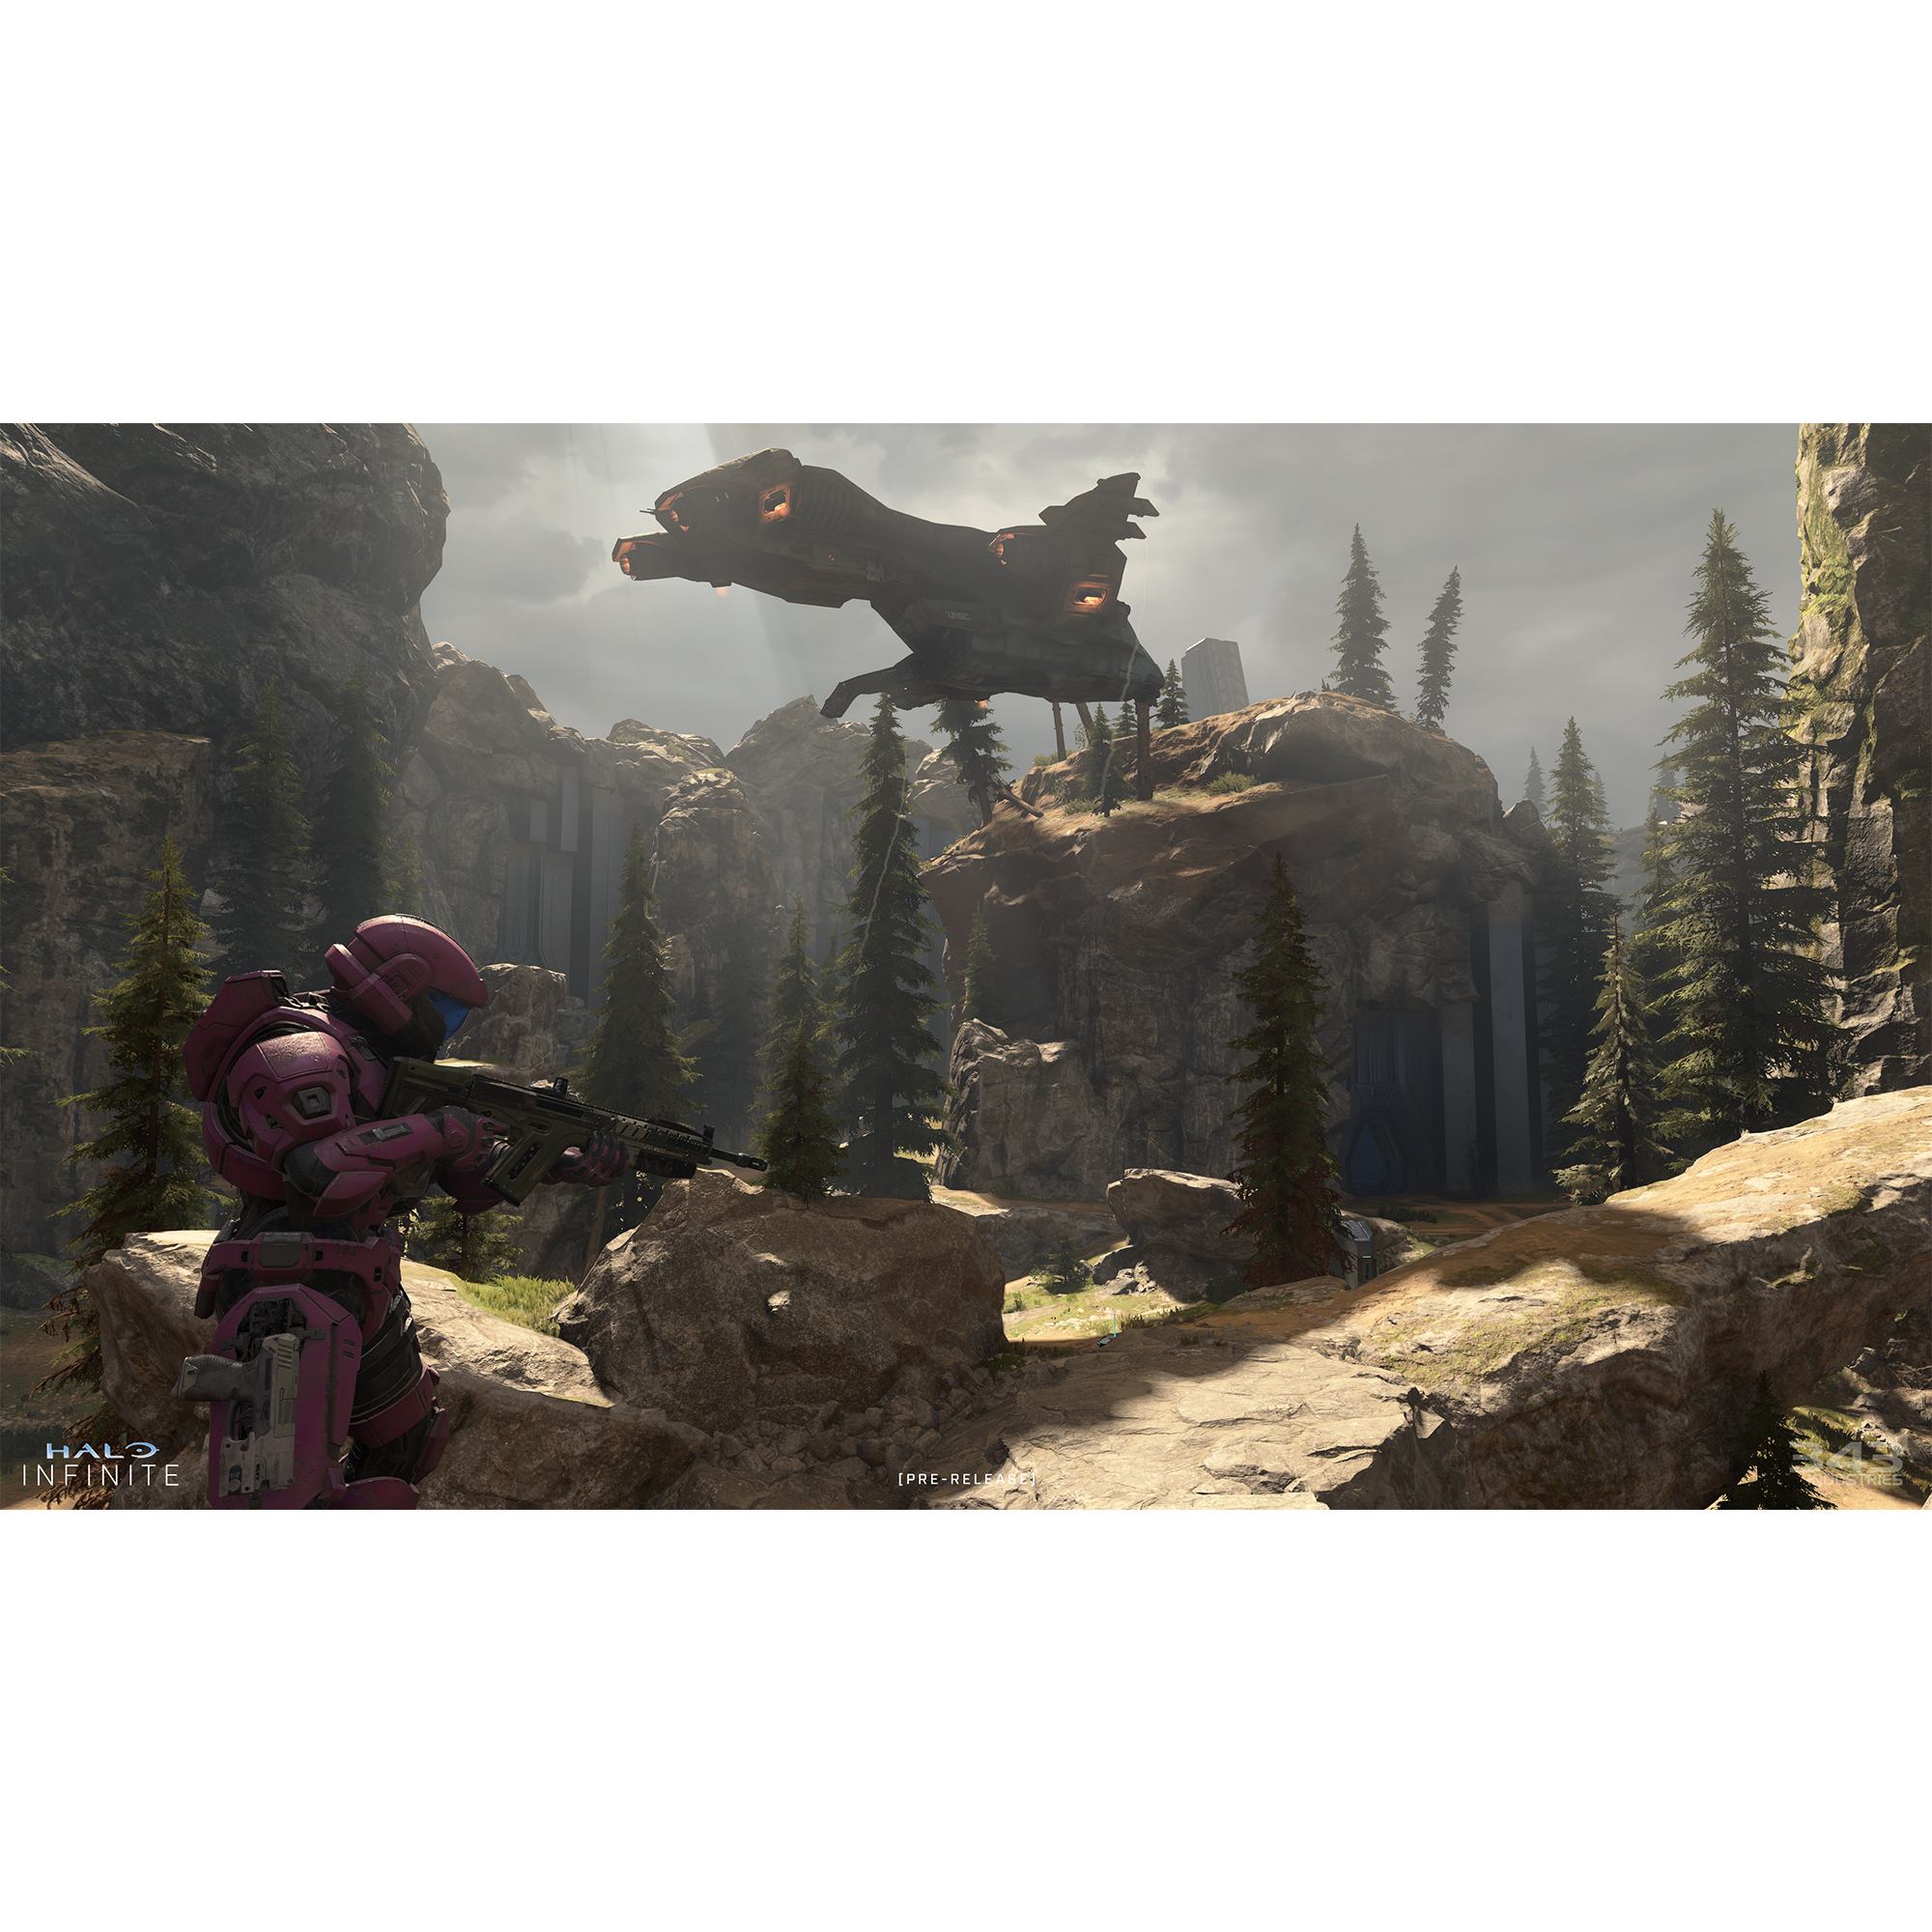  Halo Infinite - Xbox Series X : Video Games